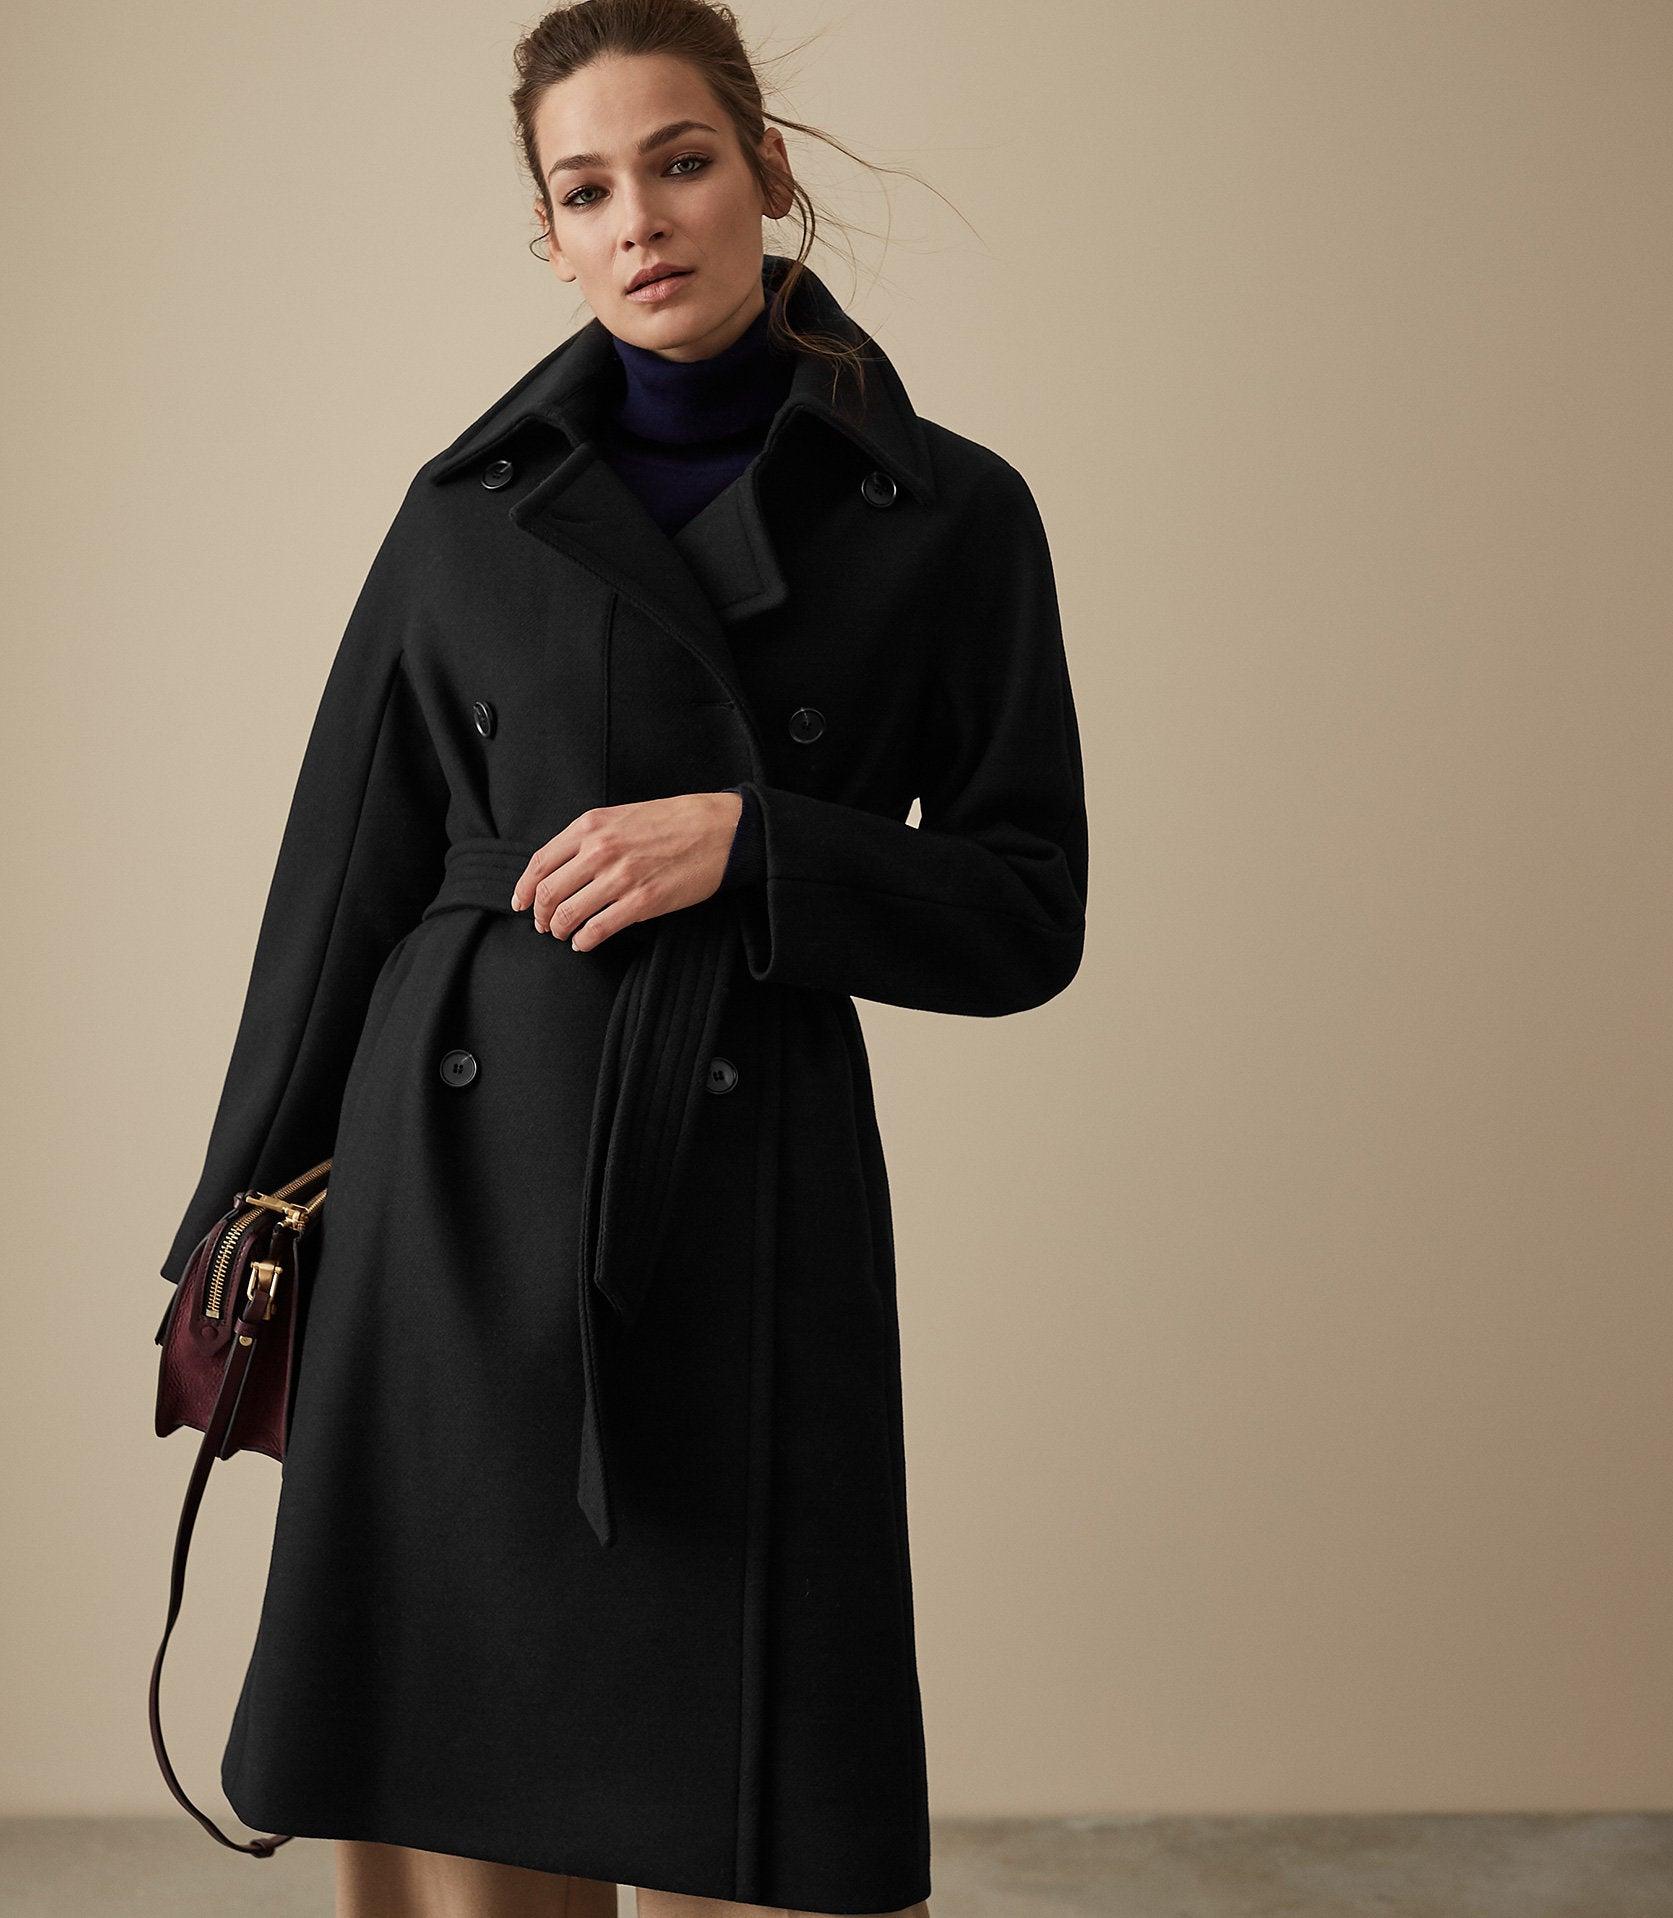 Reiss Wool Double Breasted Coat in Black - Lyst